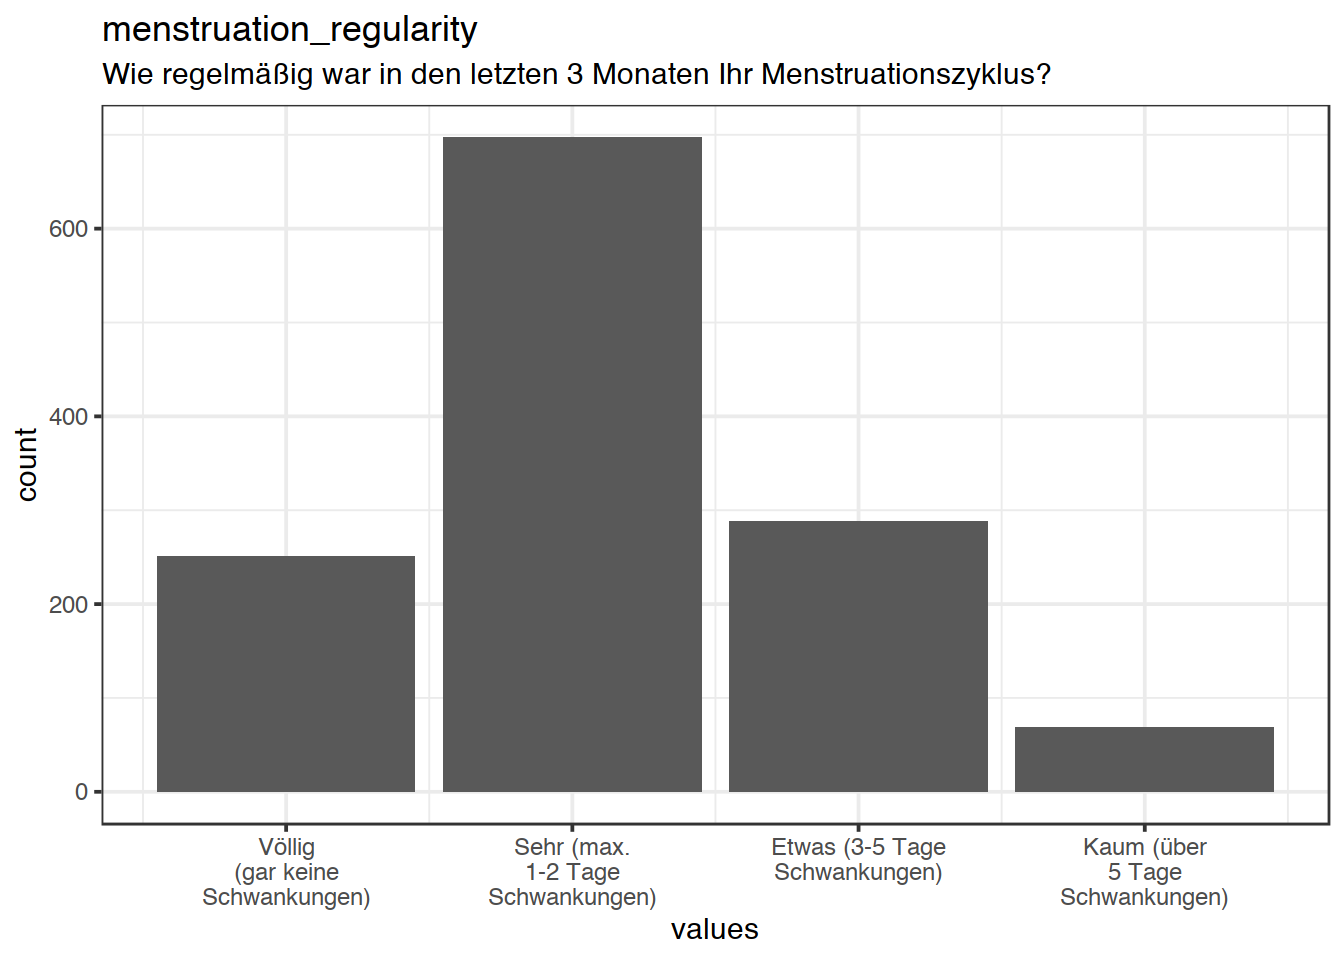 Distribution of values for menstruation_regularity